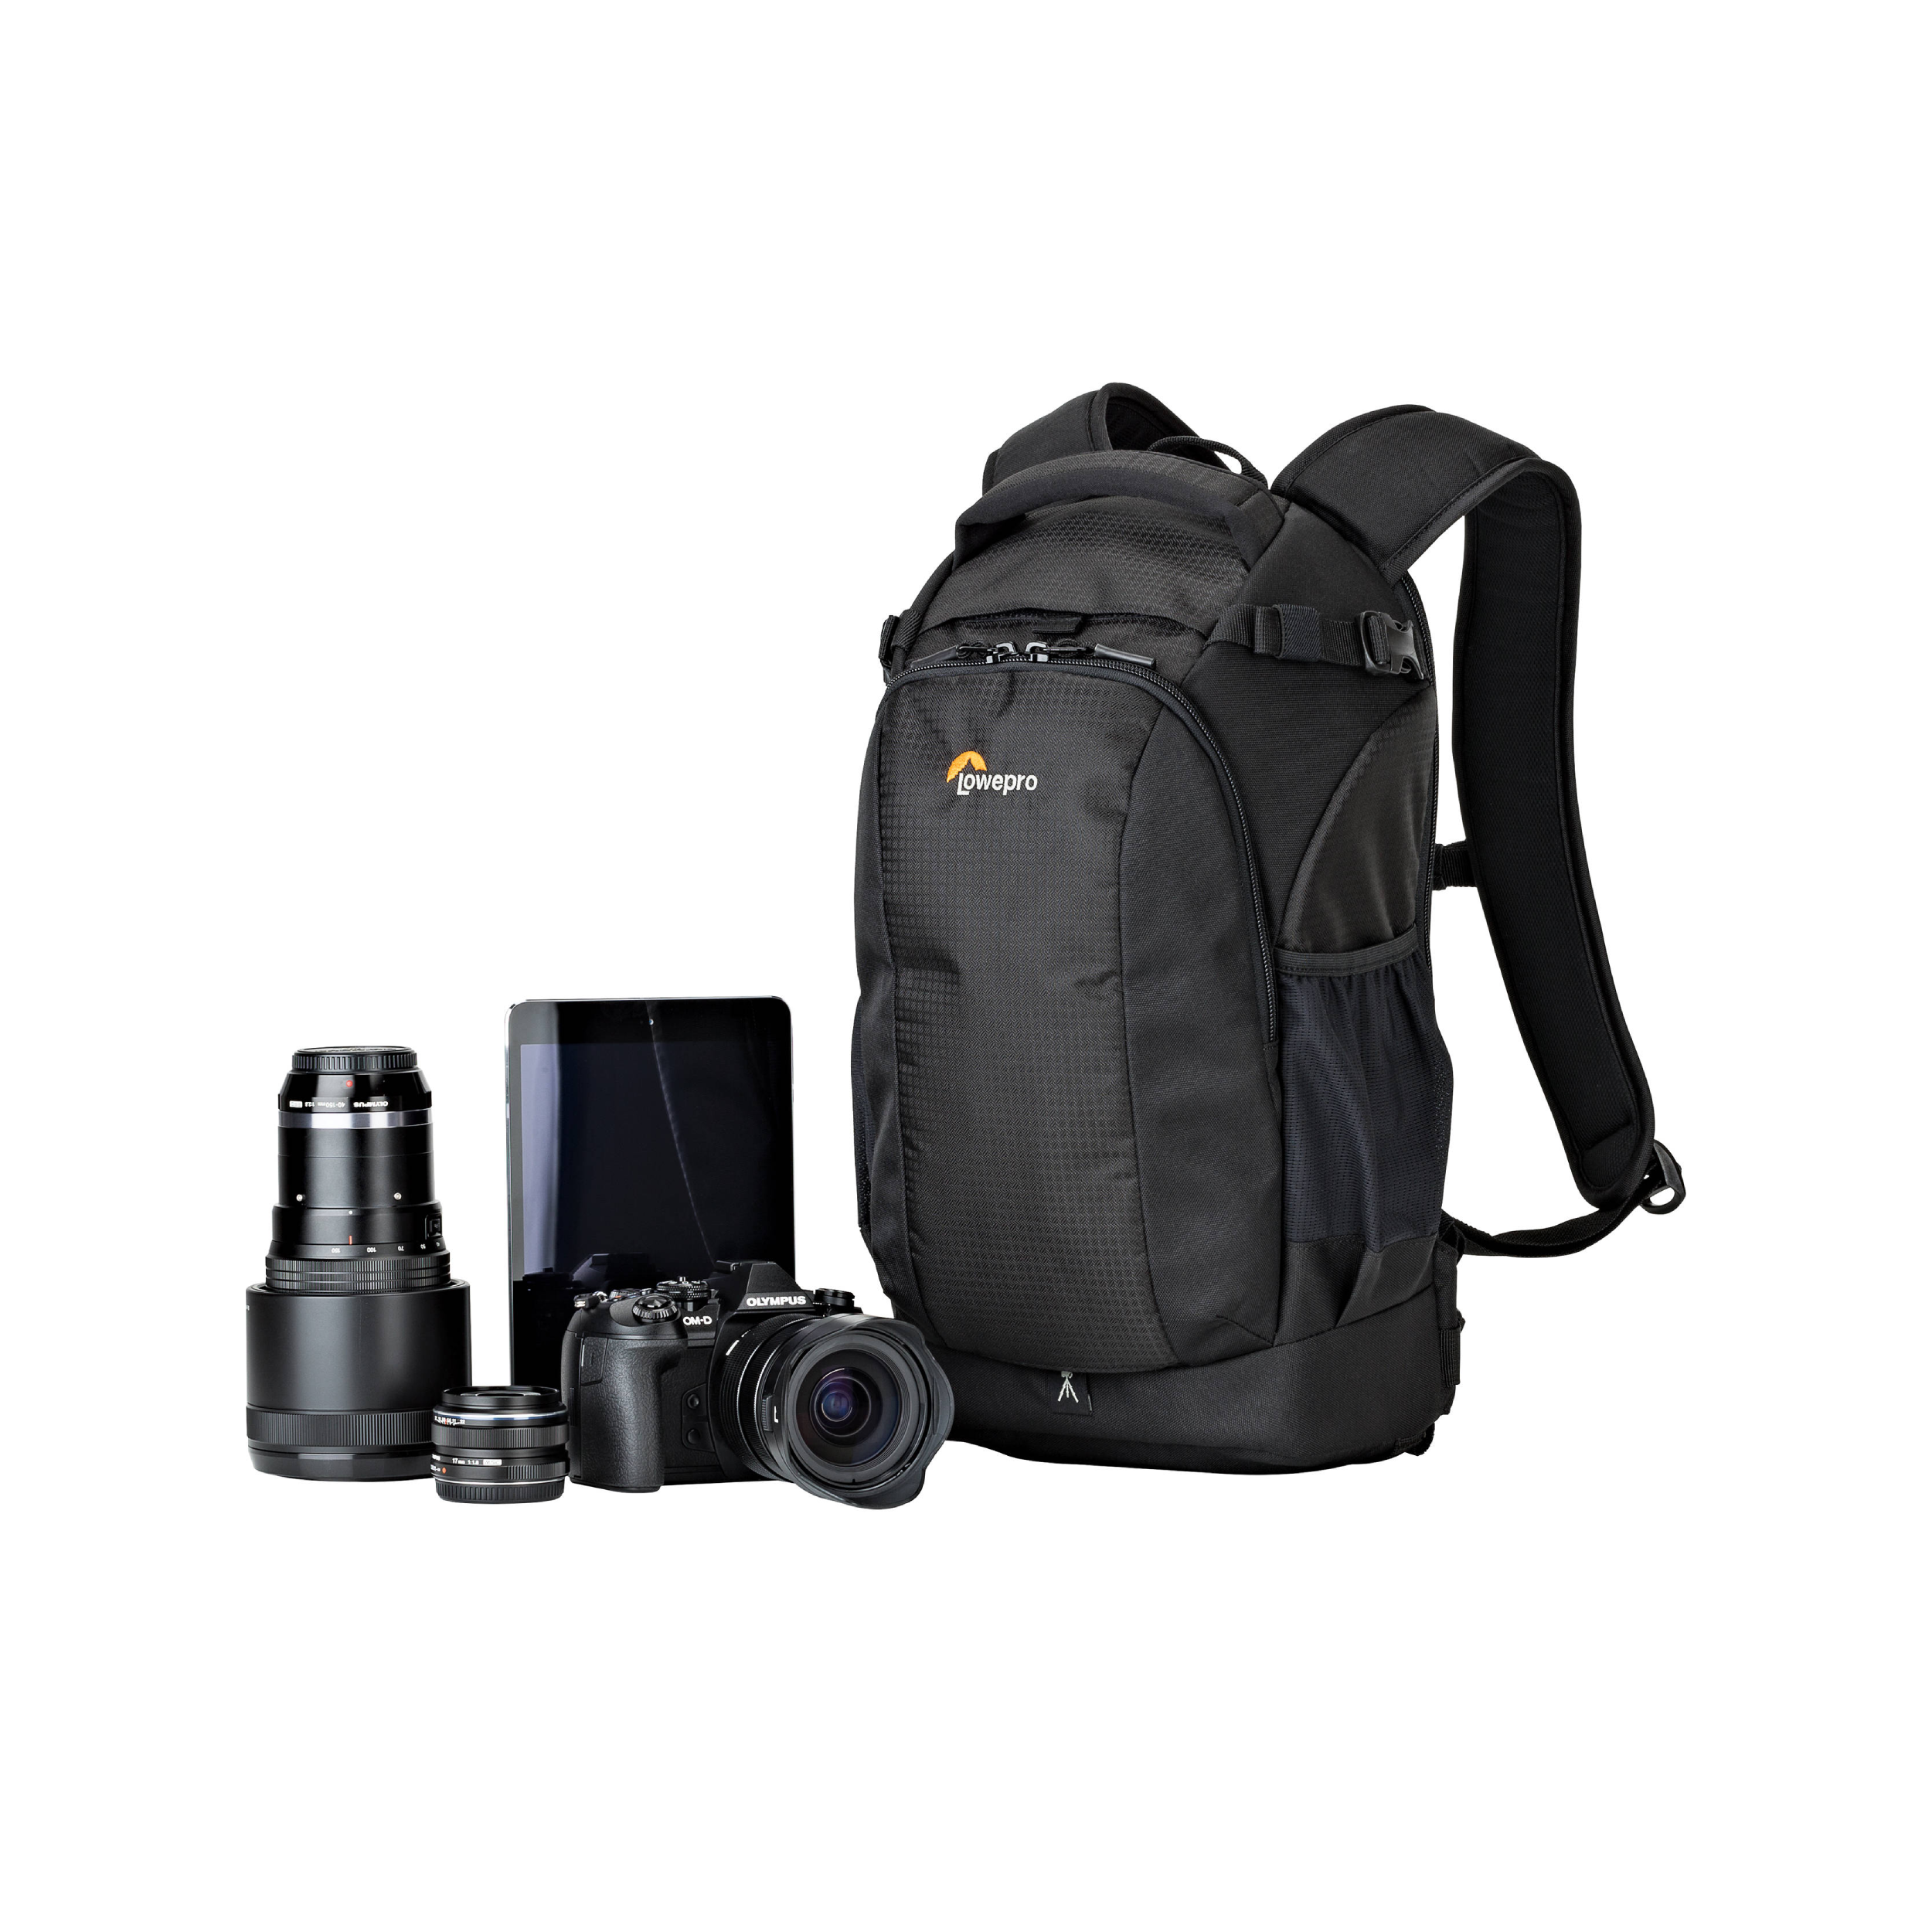 Lowepro Flipside 200 AW II Camera Backpack